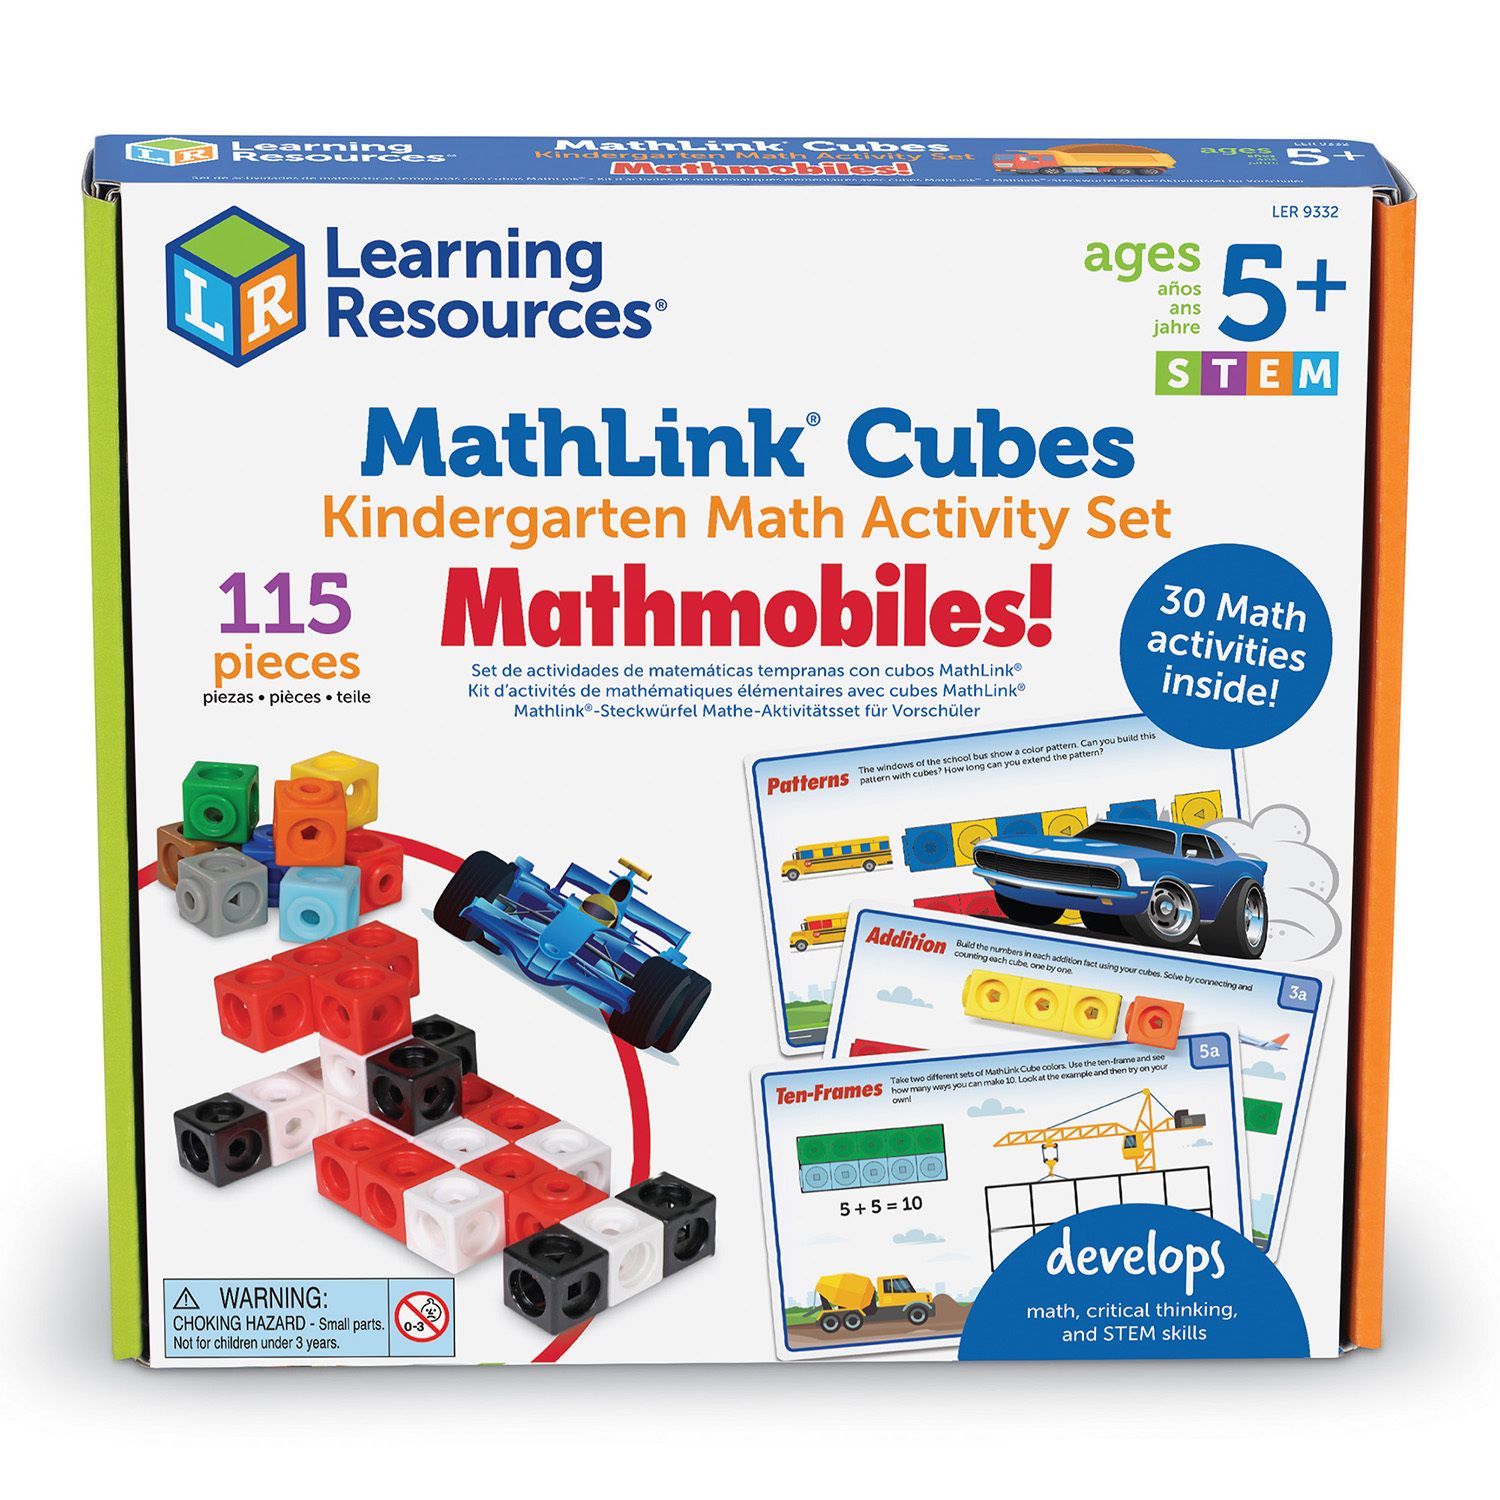 Image for Learning Resources Mathlink Cubes Kindergarten Math Activity Set: Mathmobiles! at Kohl's.